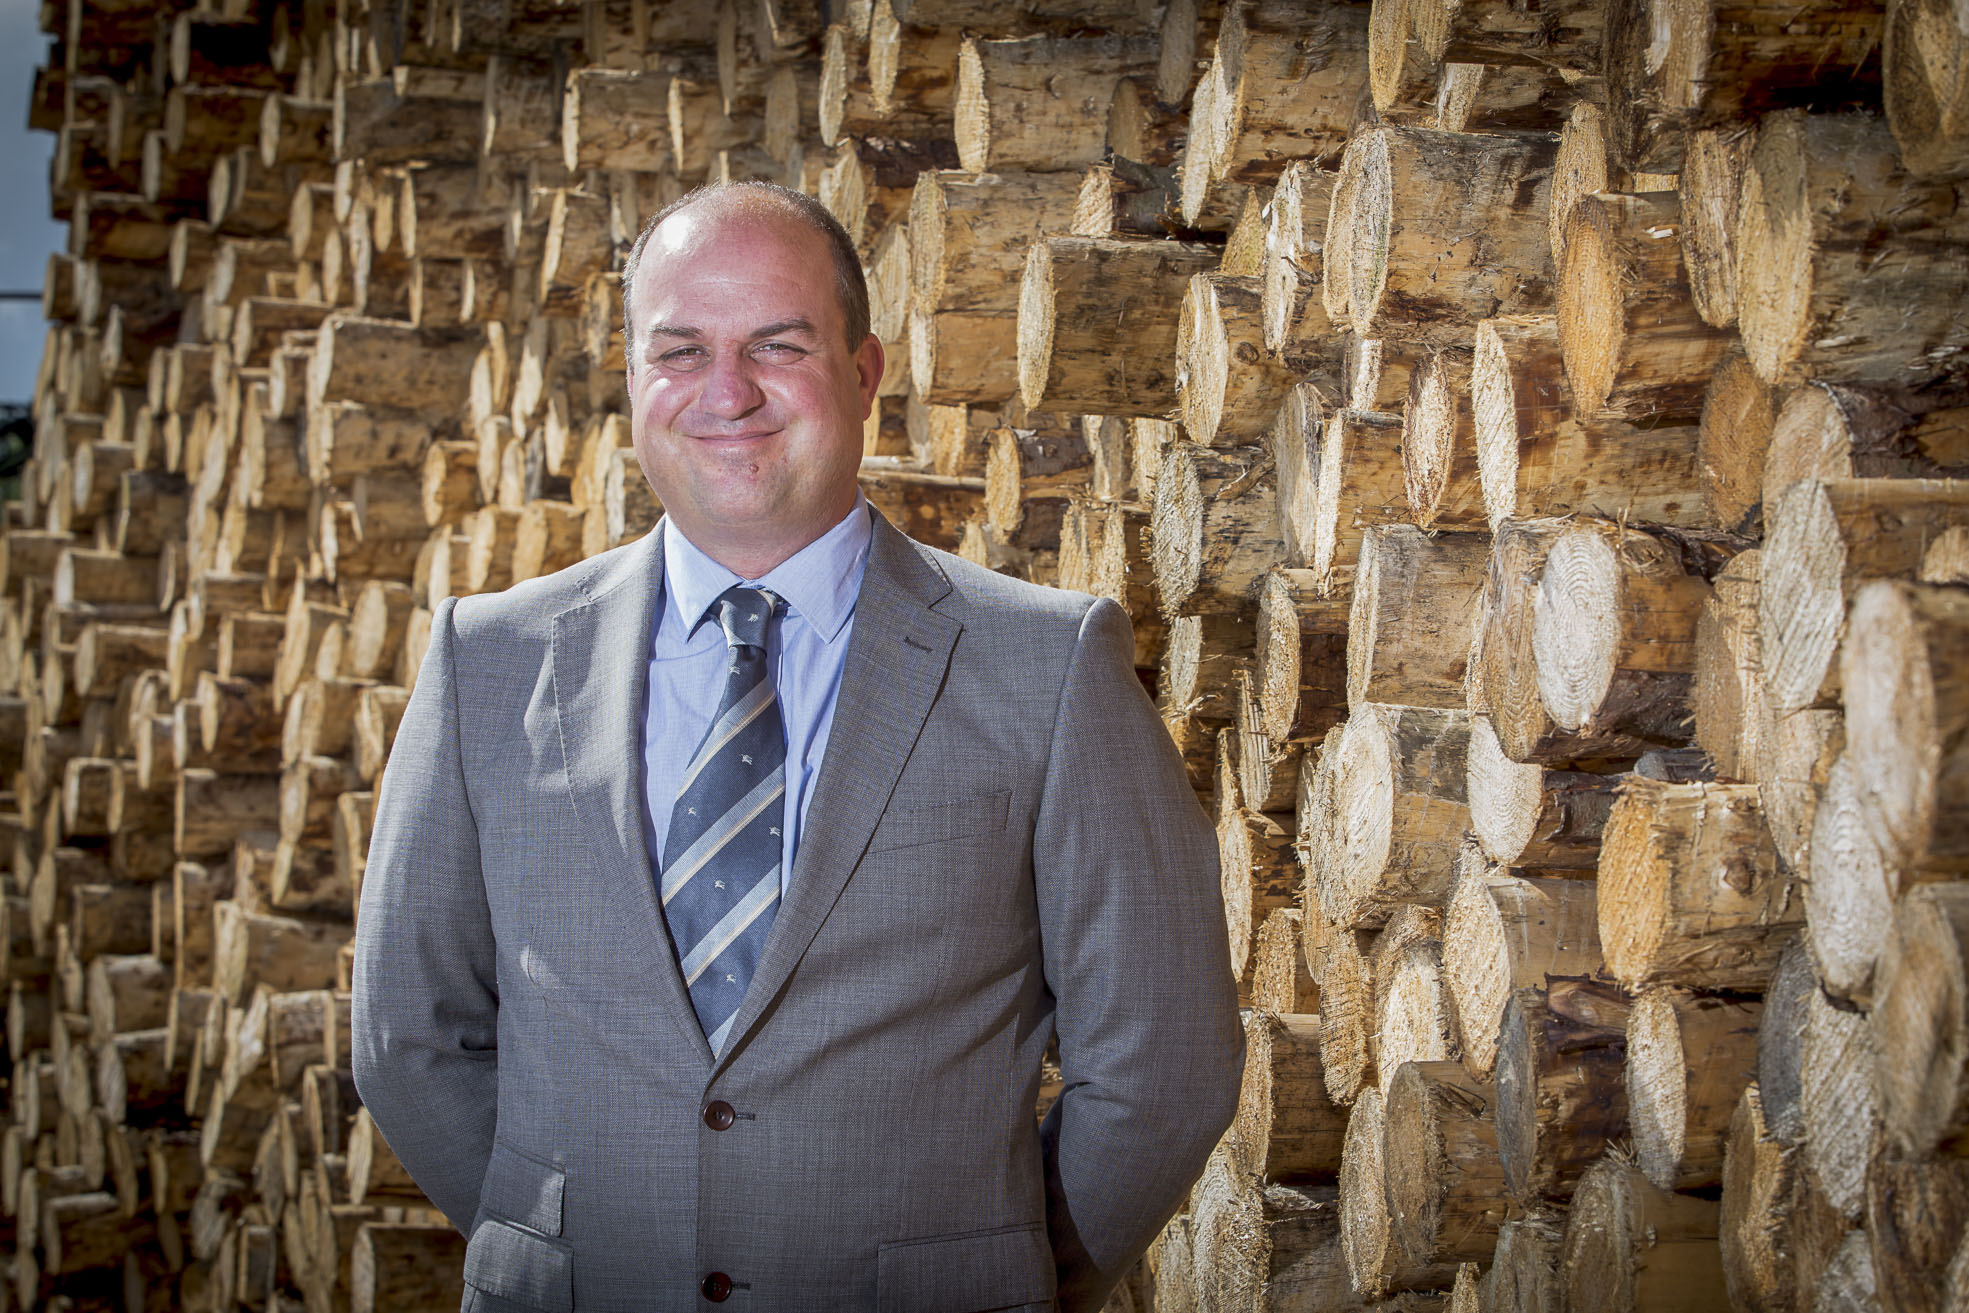 Wales faces severe wood shortage warns top timber company